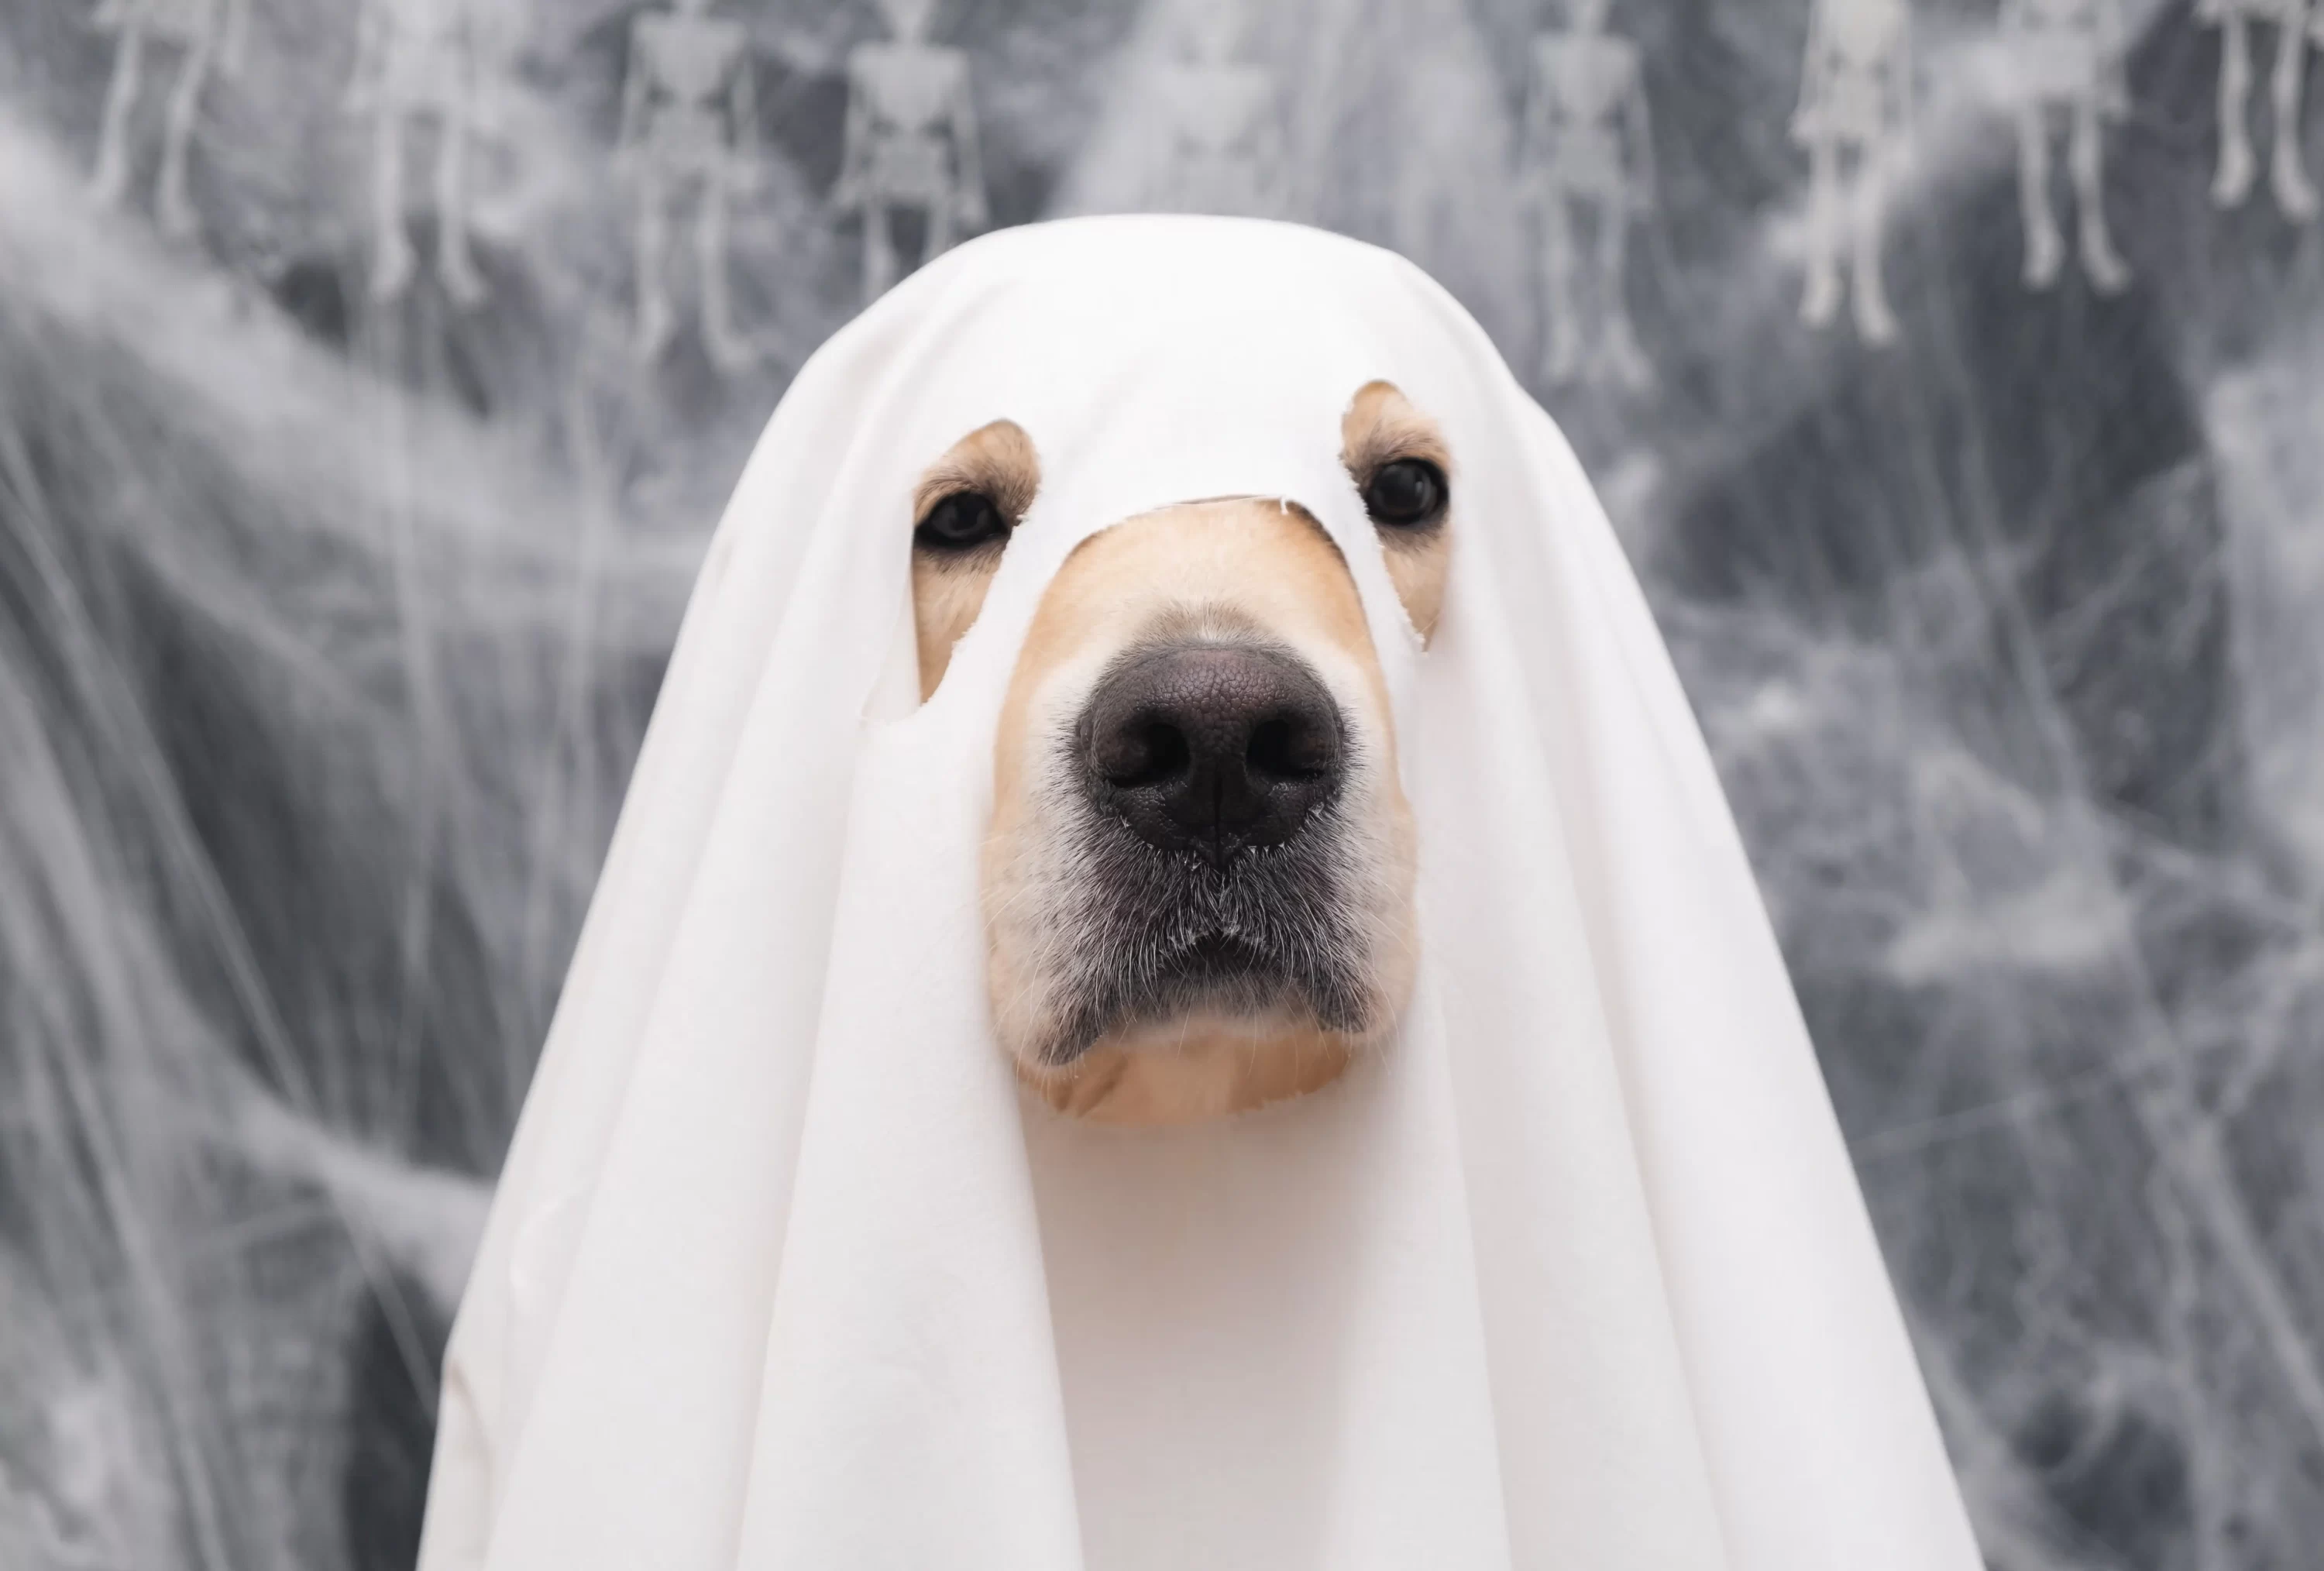 Dog ghost halloween costume. 